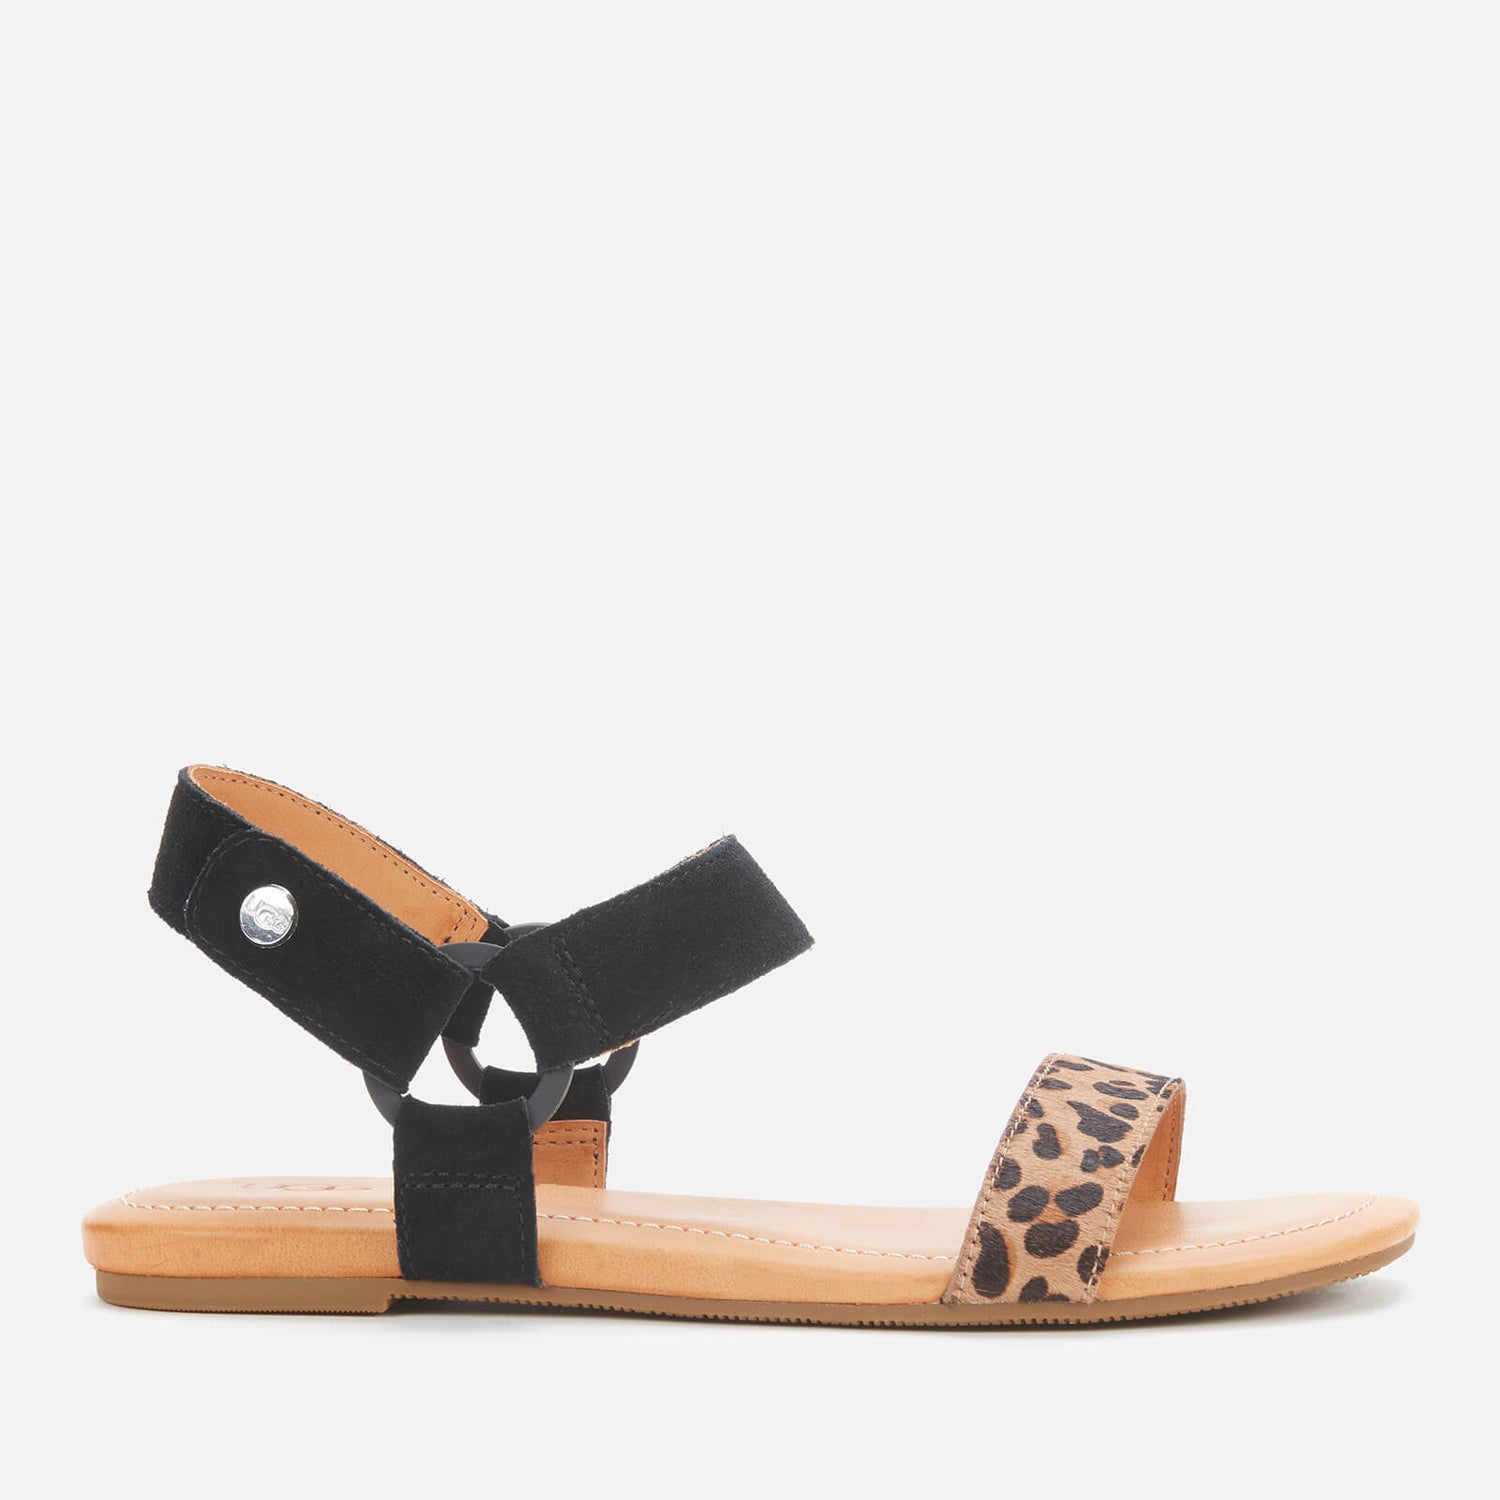 UGG Women's Rynell Leopard Double Strap Sandals - Black/Tan